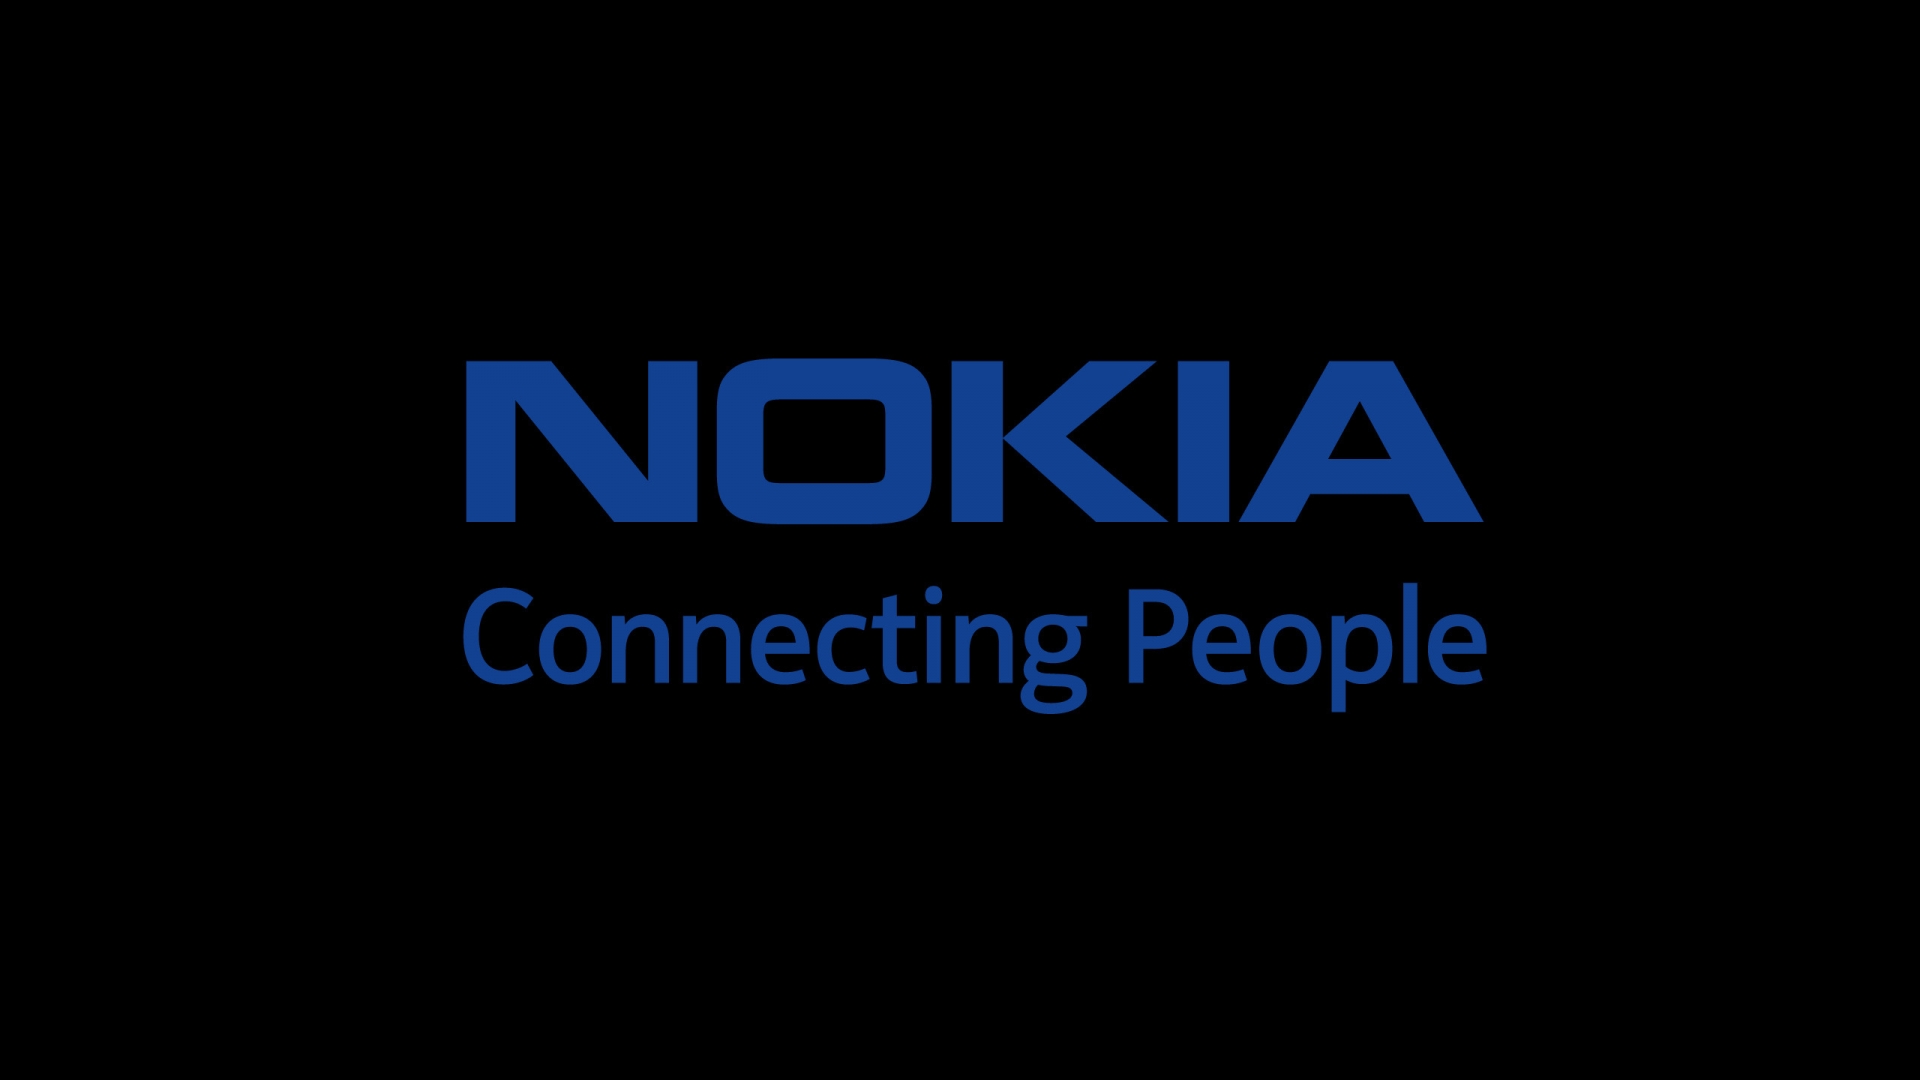 Nokia for 1920 x 1080 HDTV 1080p resolution